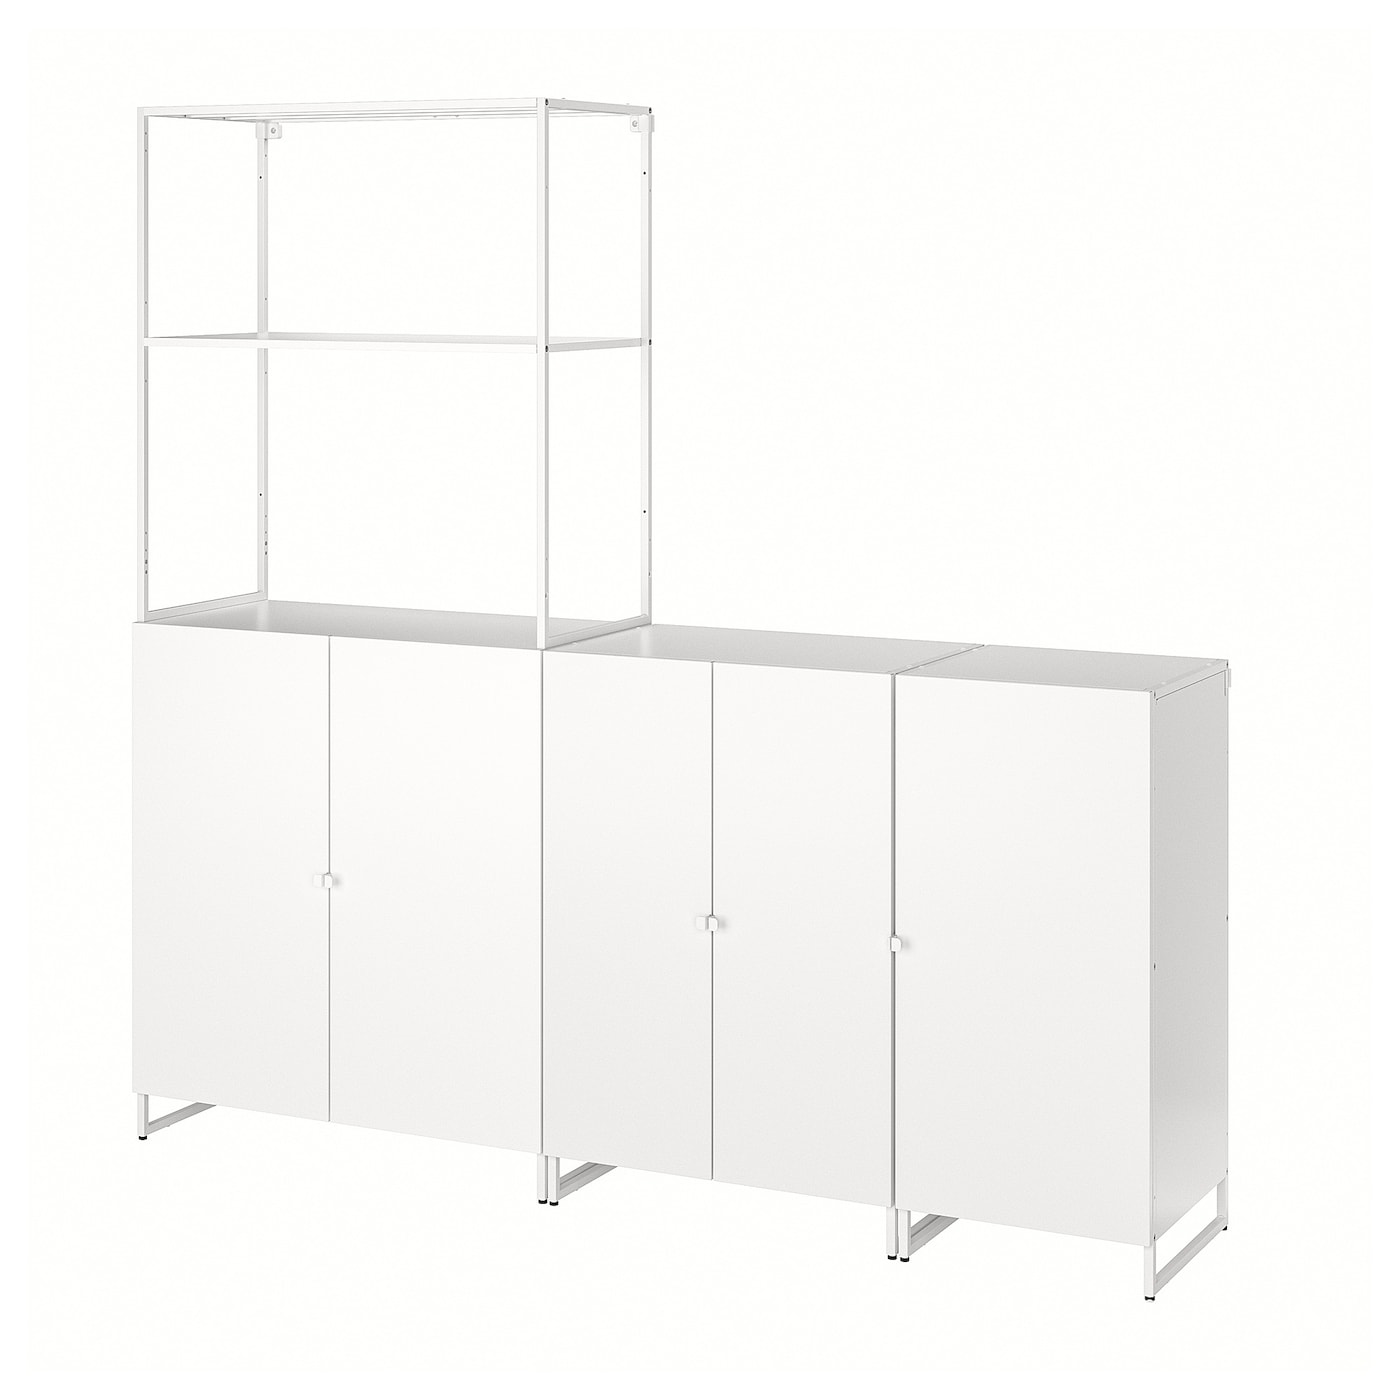 Книжный шкаф - JOSTEIN IKEA/ ЙОСТЕЙН ИКЕА,  180х182 см, белый